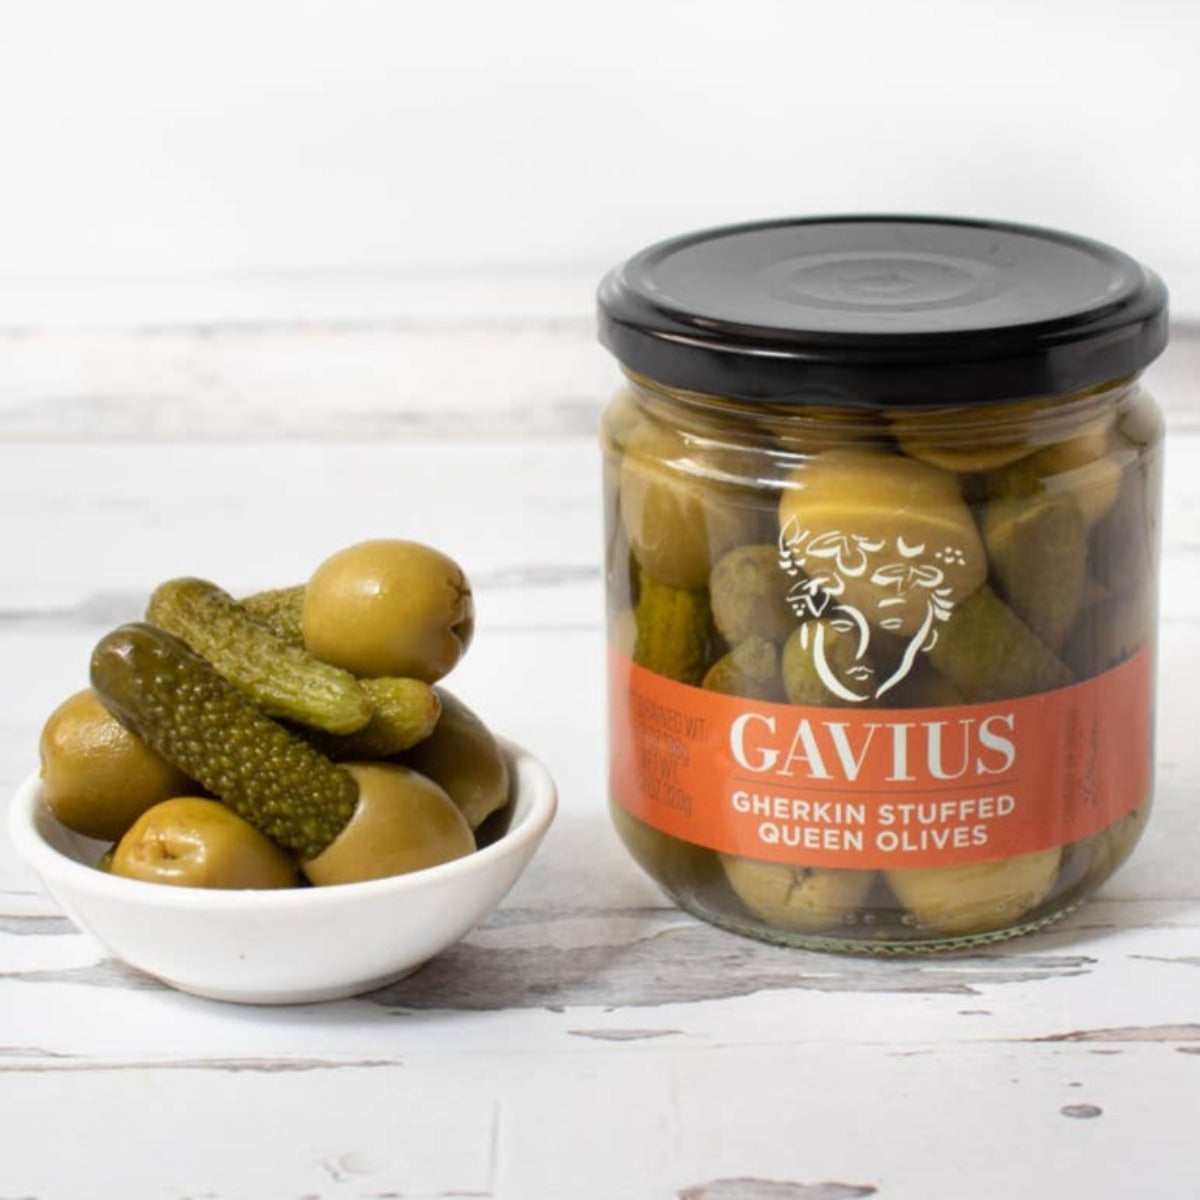 gherkin stuffed olives